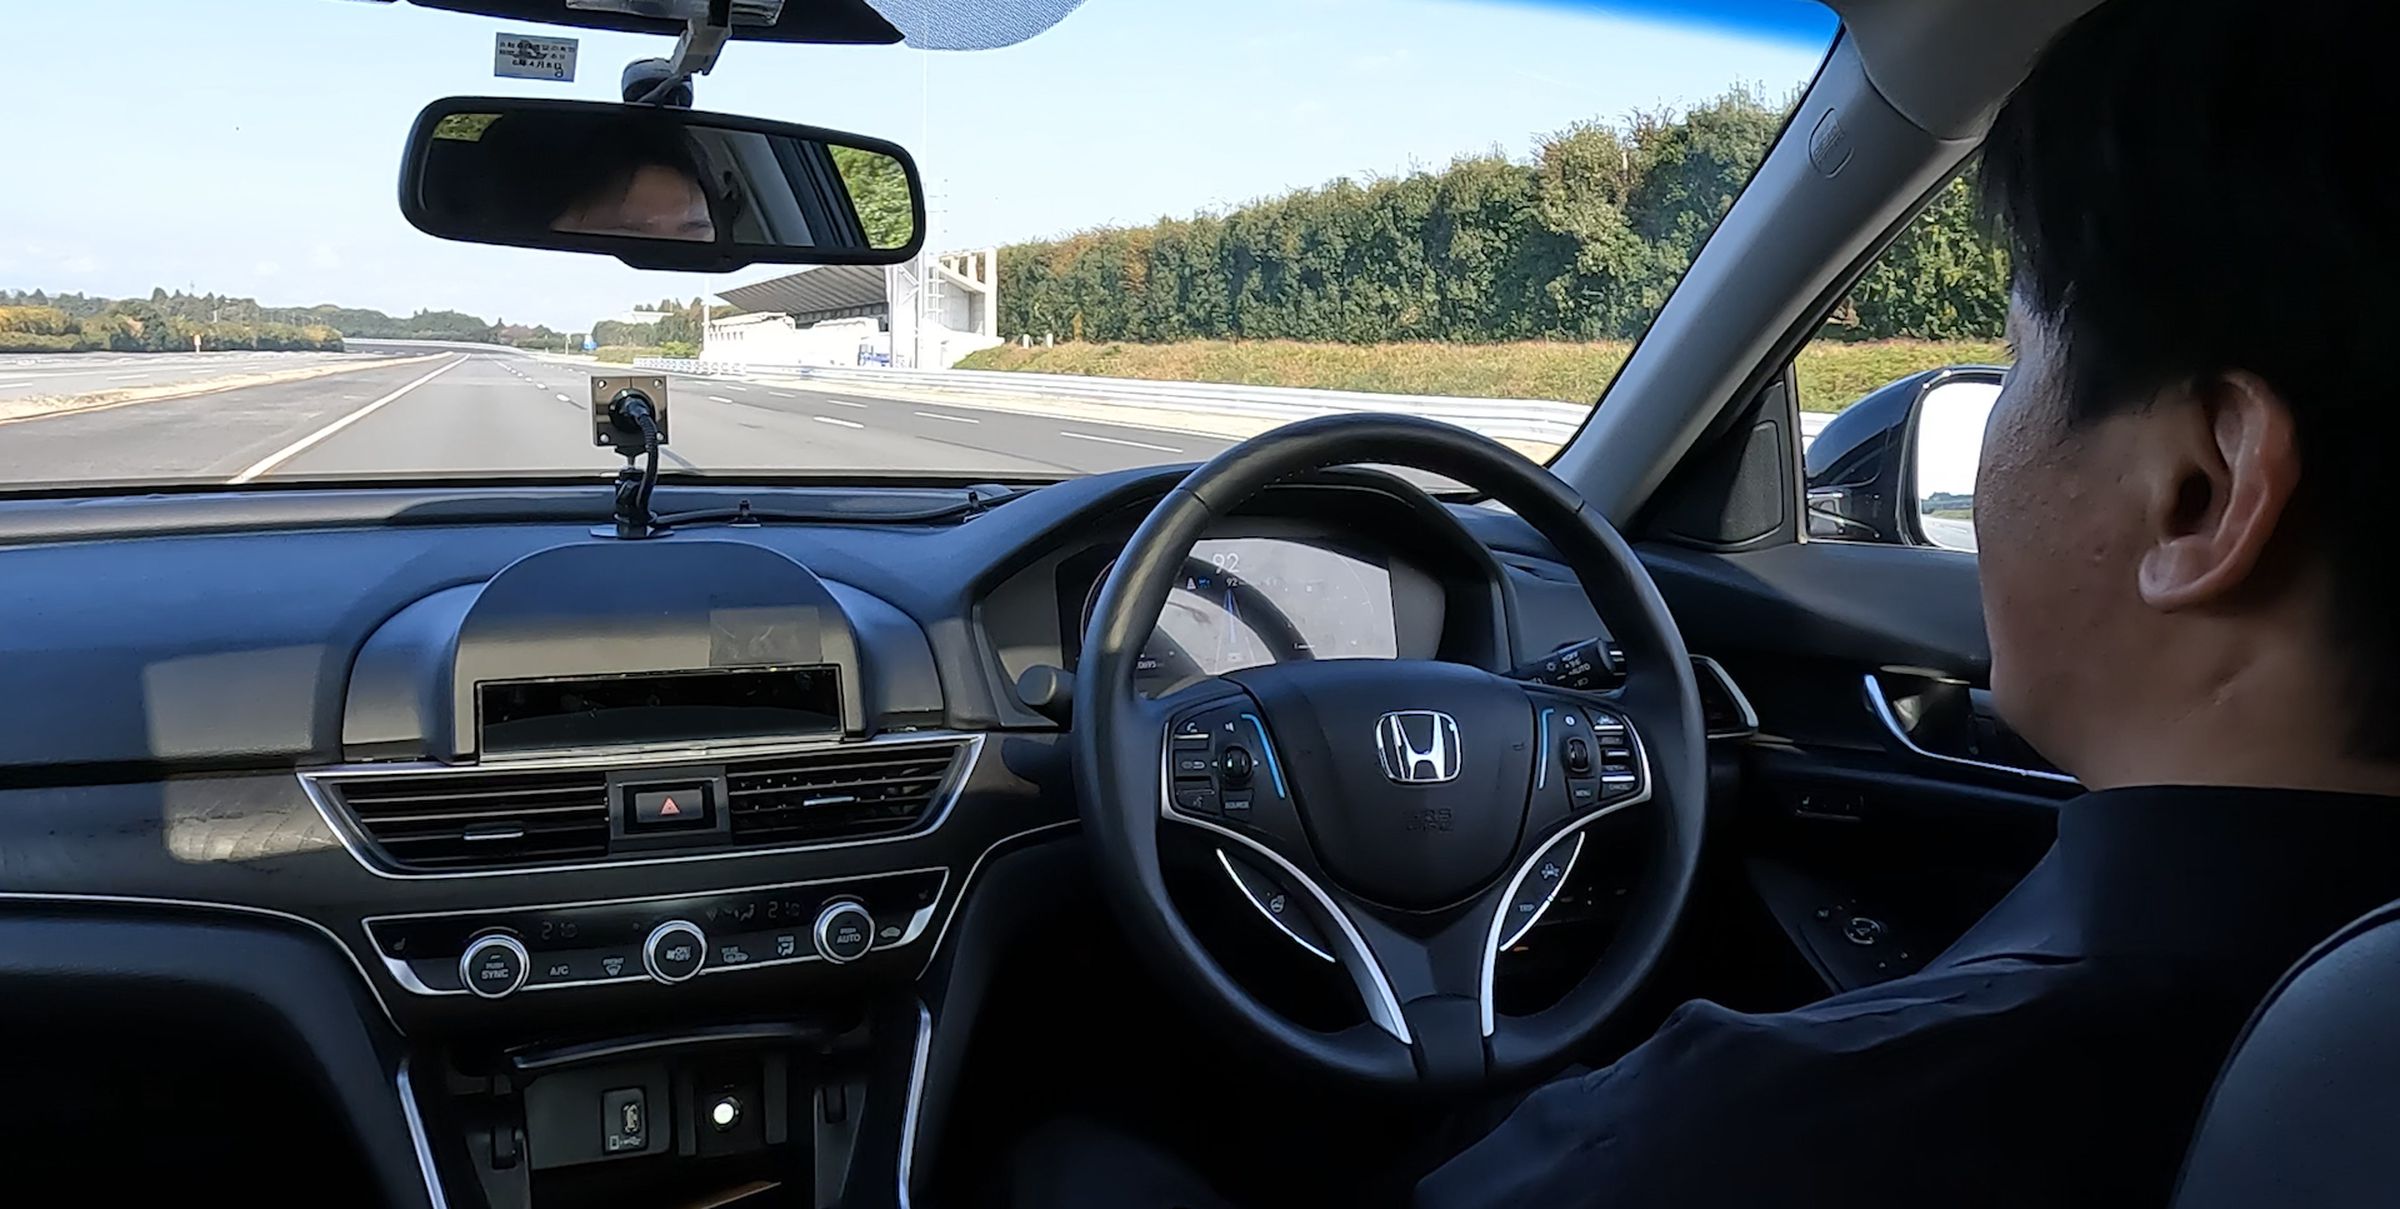 Honda hands-free driving